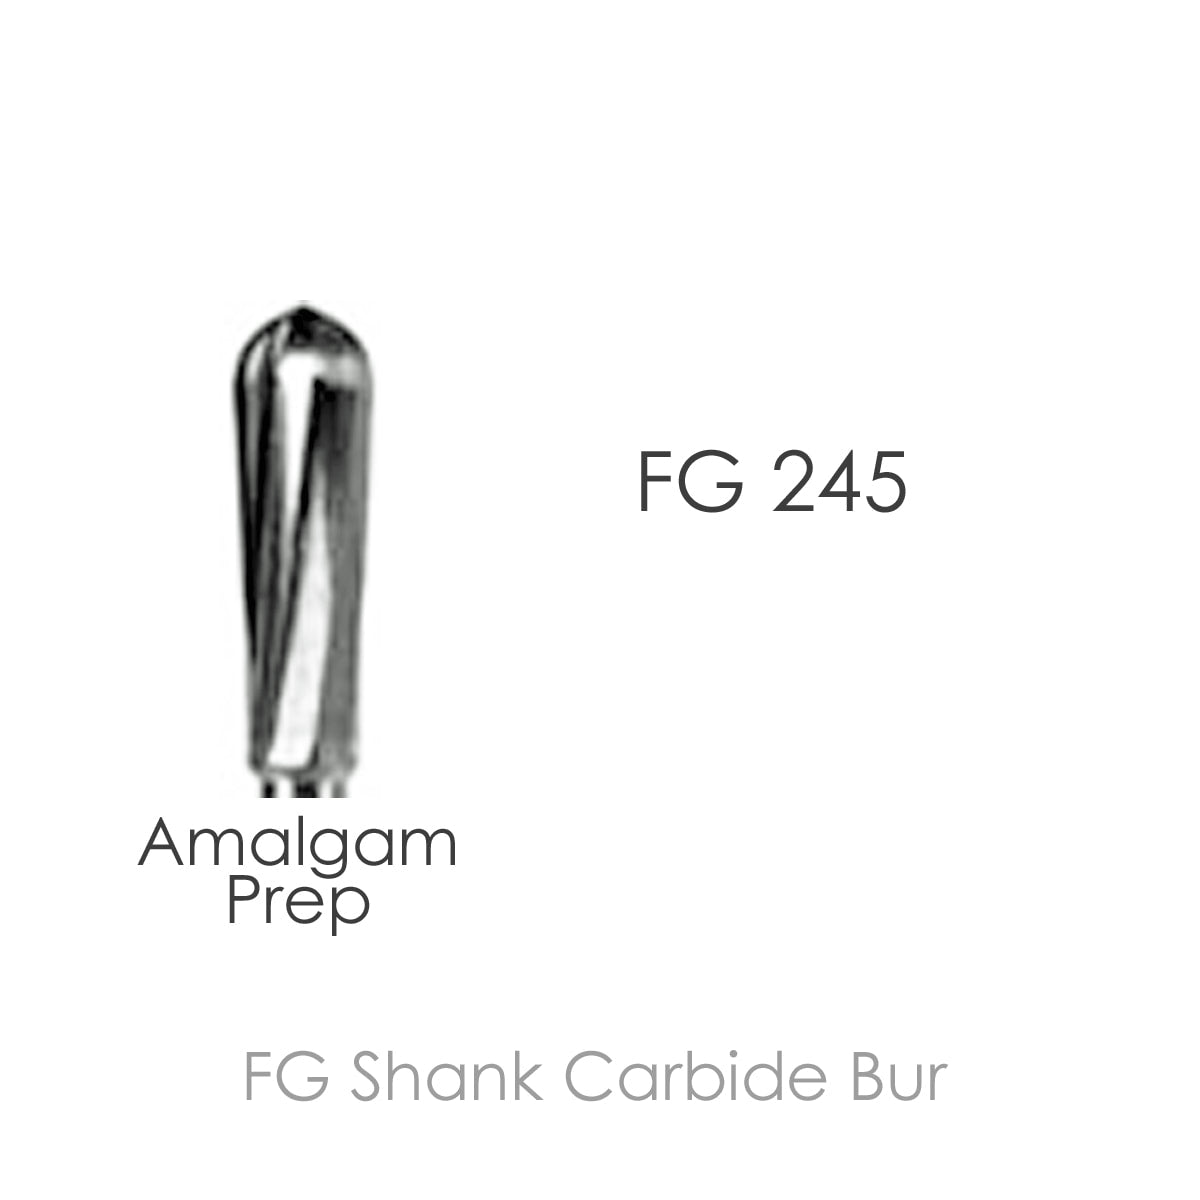 Carbide bur  FG245, Amalgam Prep, 10pcs/Pack